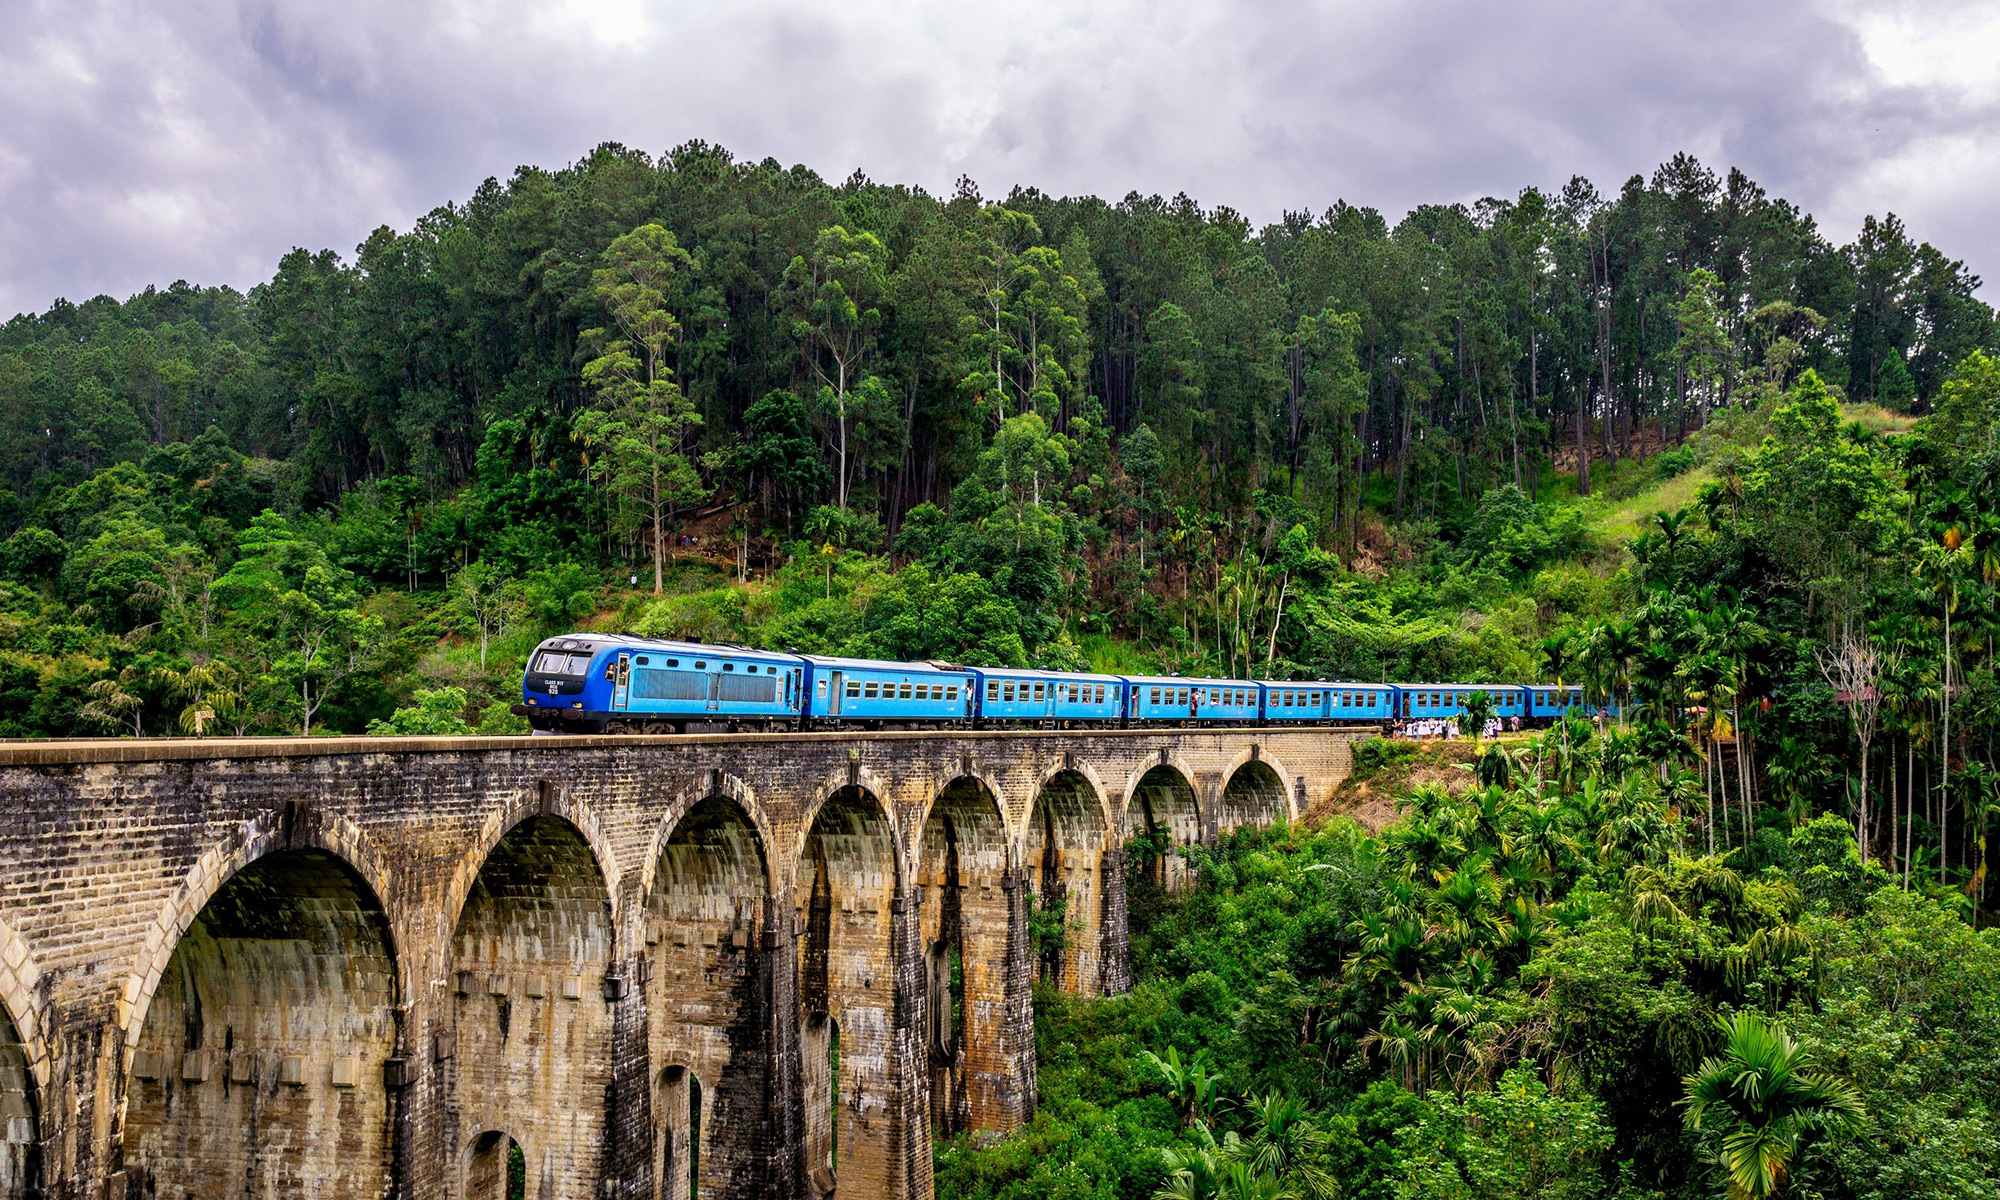 Taking a train drive through Sri Lanka